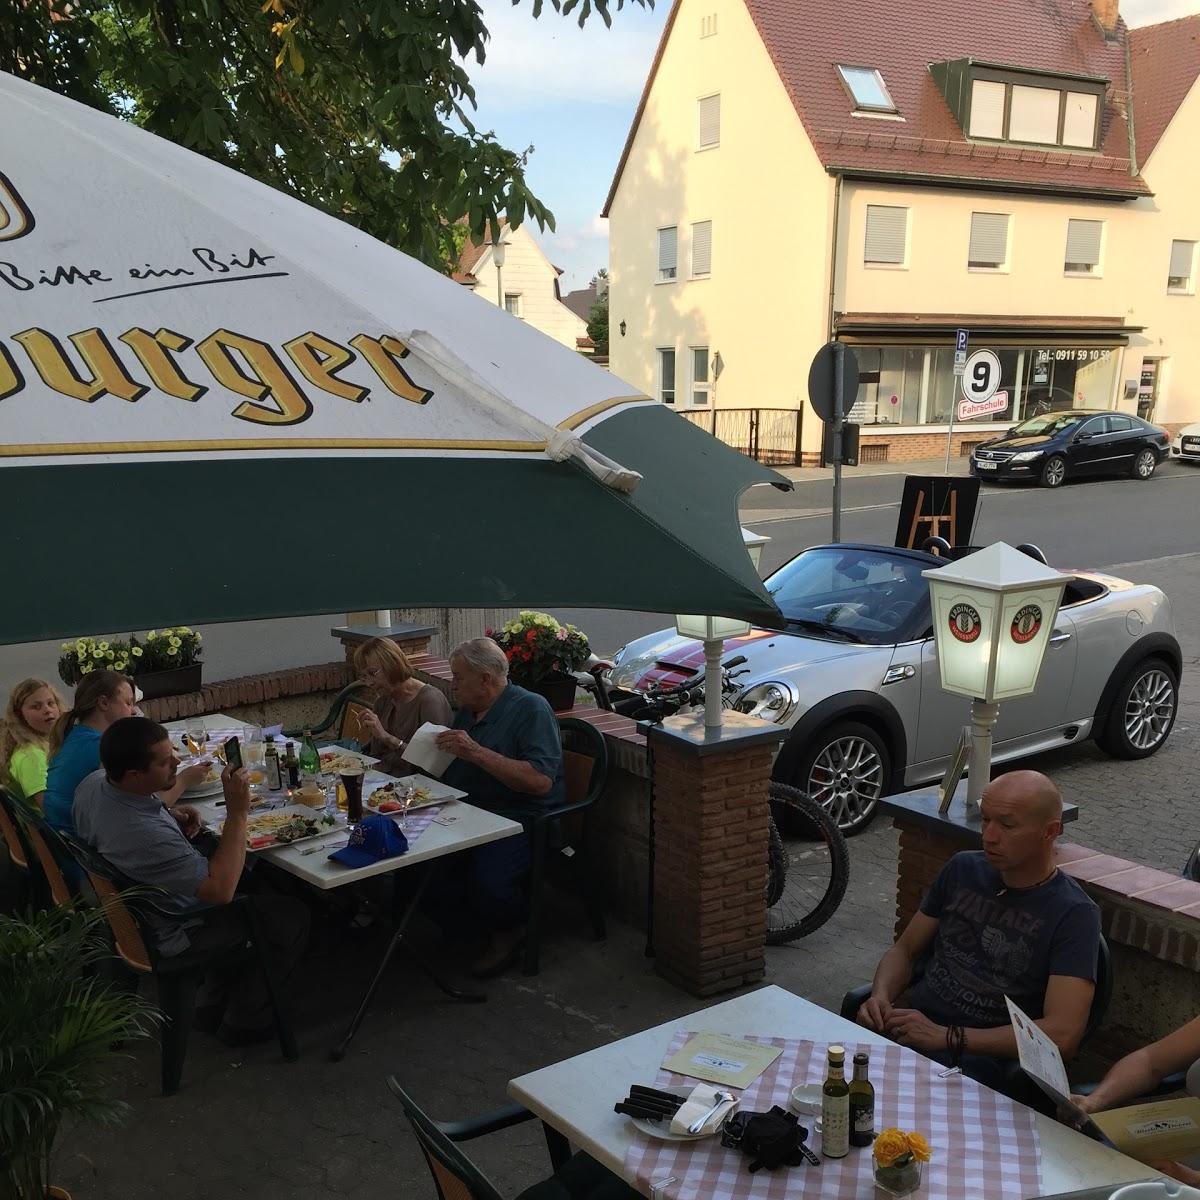 Restaurant "Ricchi e Poveri – Trattoria – Pizzeria" in Schwaig bei Nürnberg